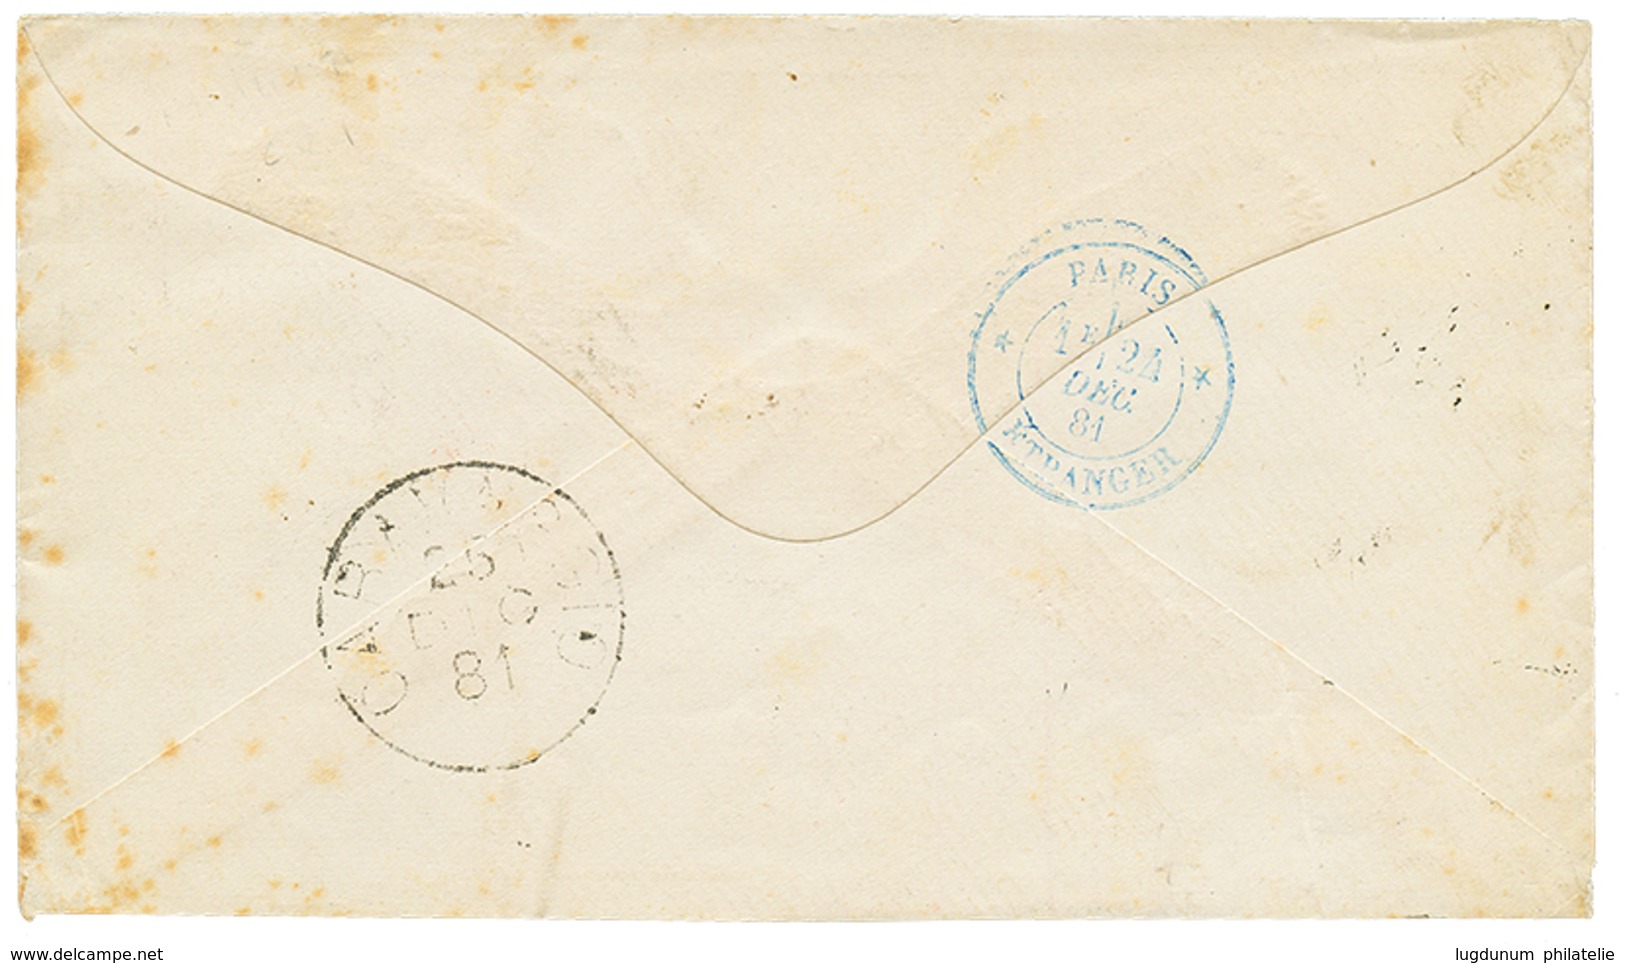 1144 1881 CHILE 5c(x3) Canc. COPIAPO + Red Cds PANAMA-UNION PAQ.F A N°1 On Envelope To ITALIA. Superb. - Chili